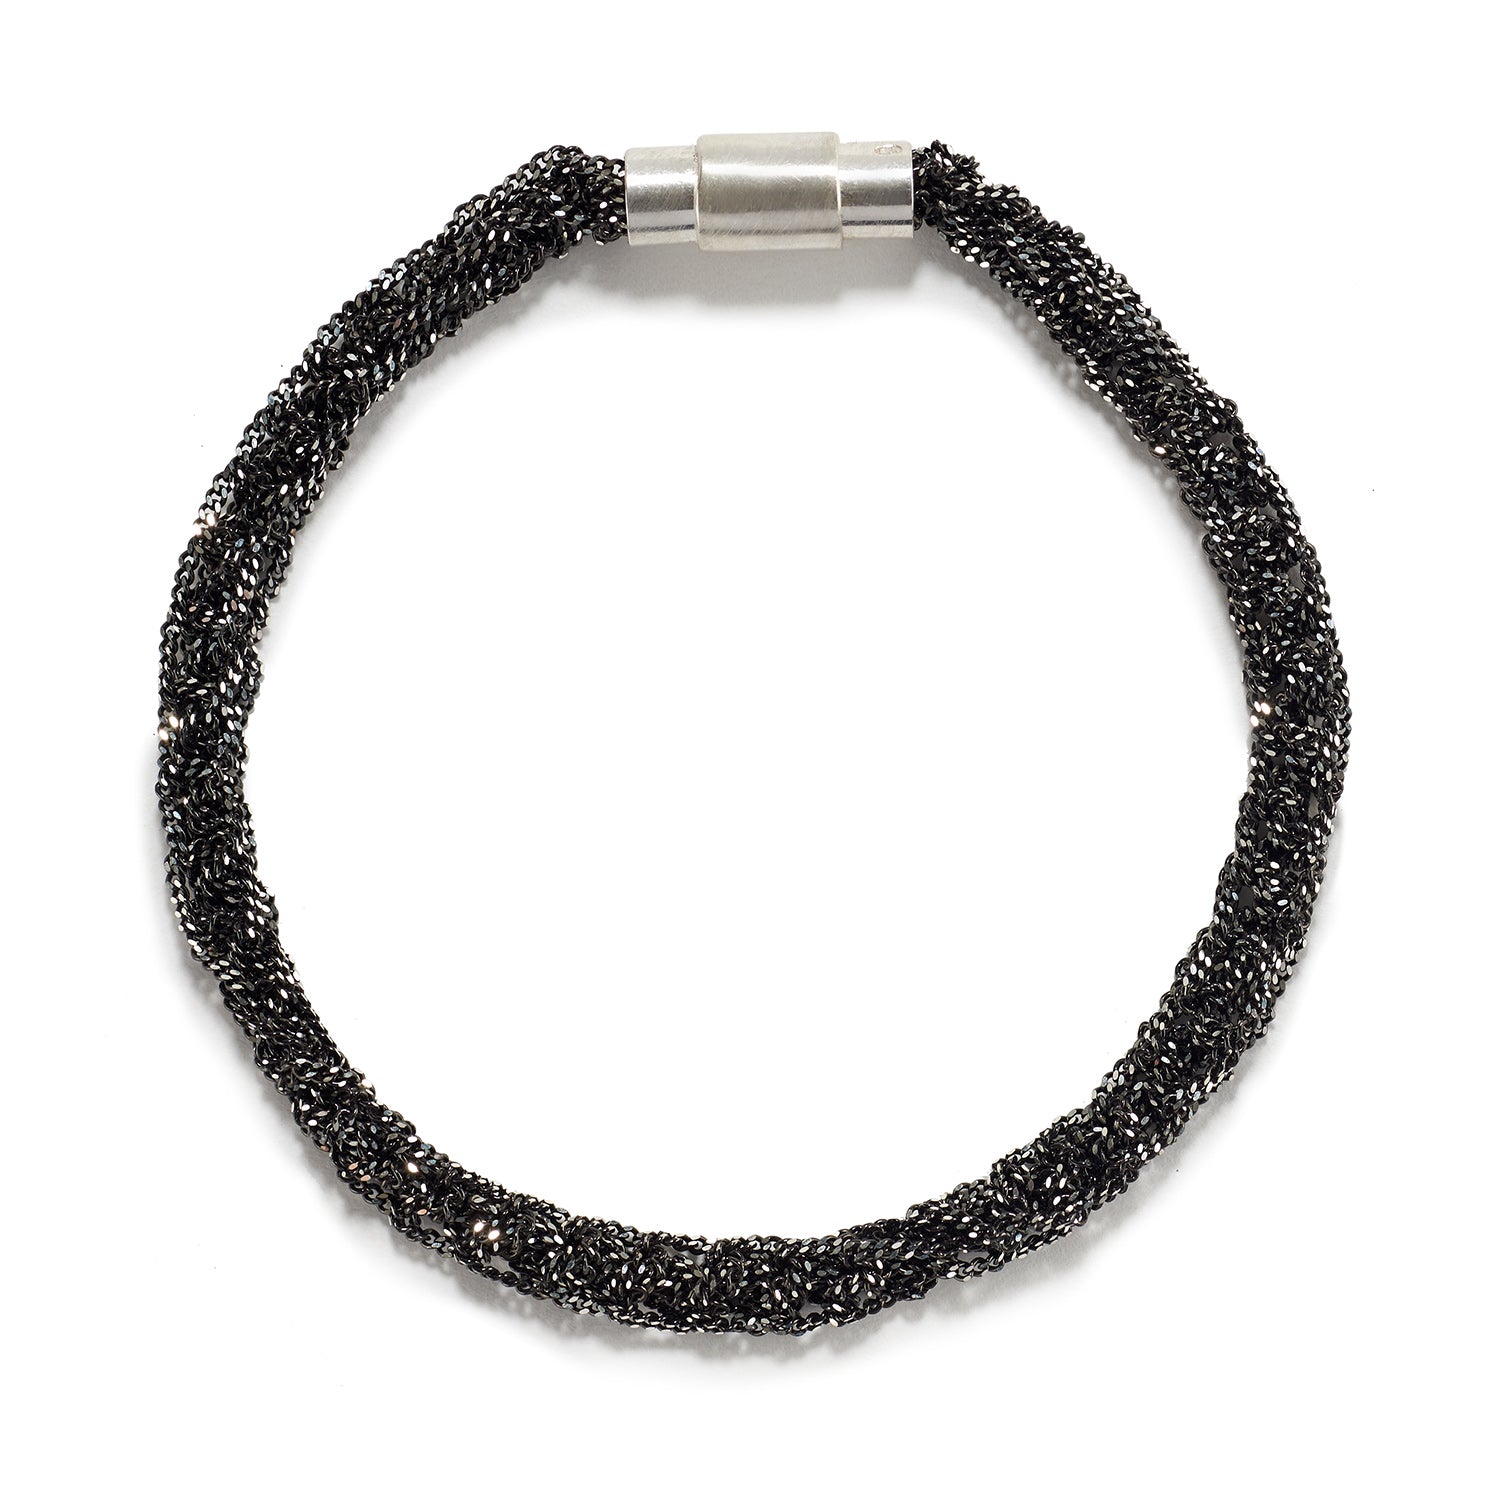 Knitted Oxidized Silver Bracelet